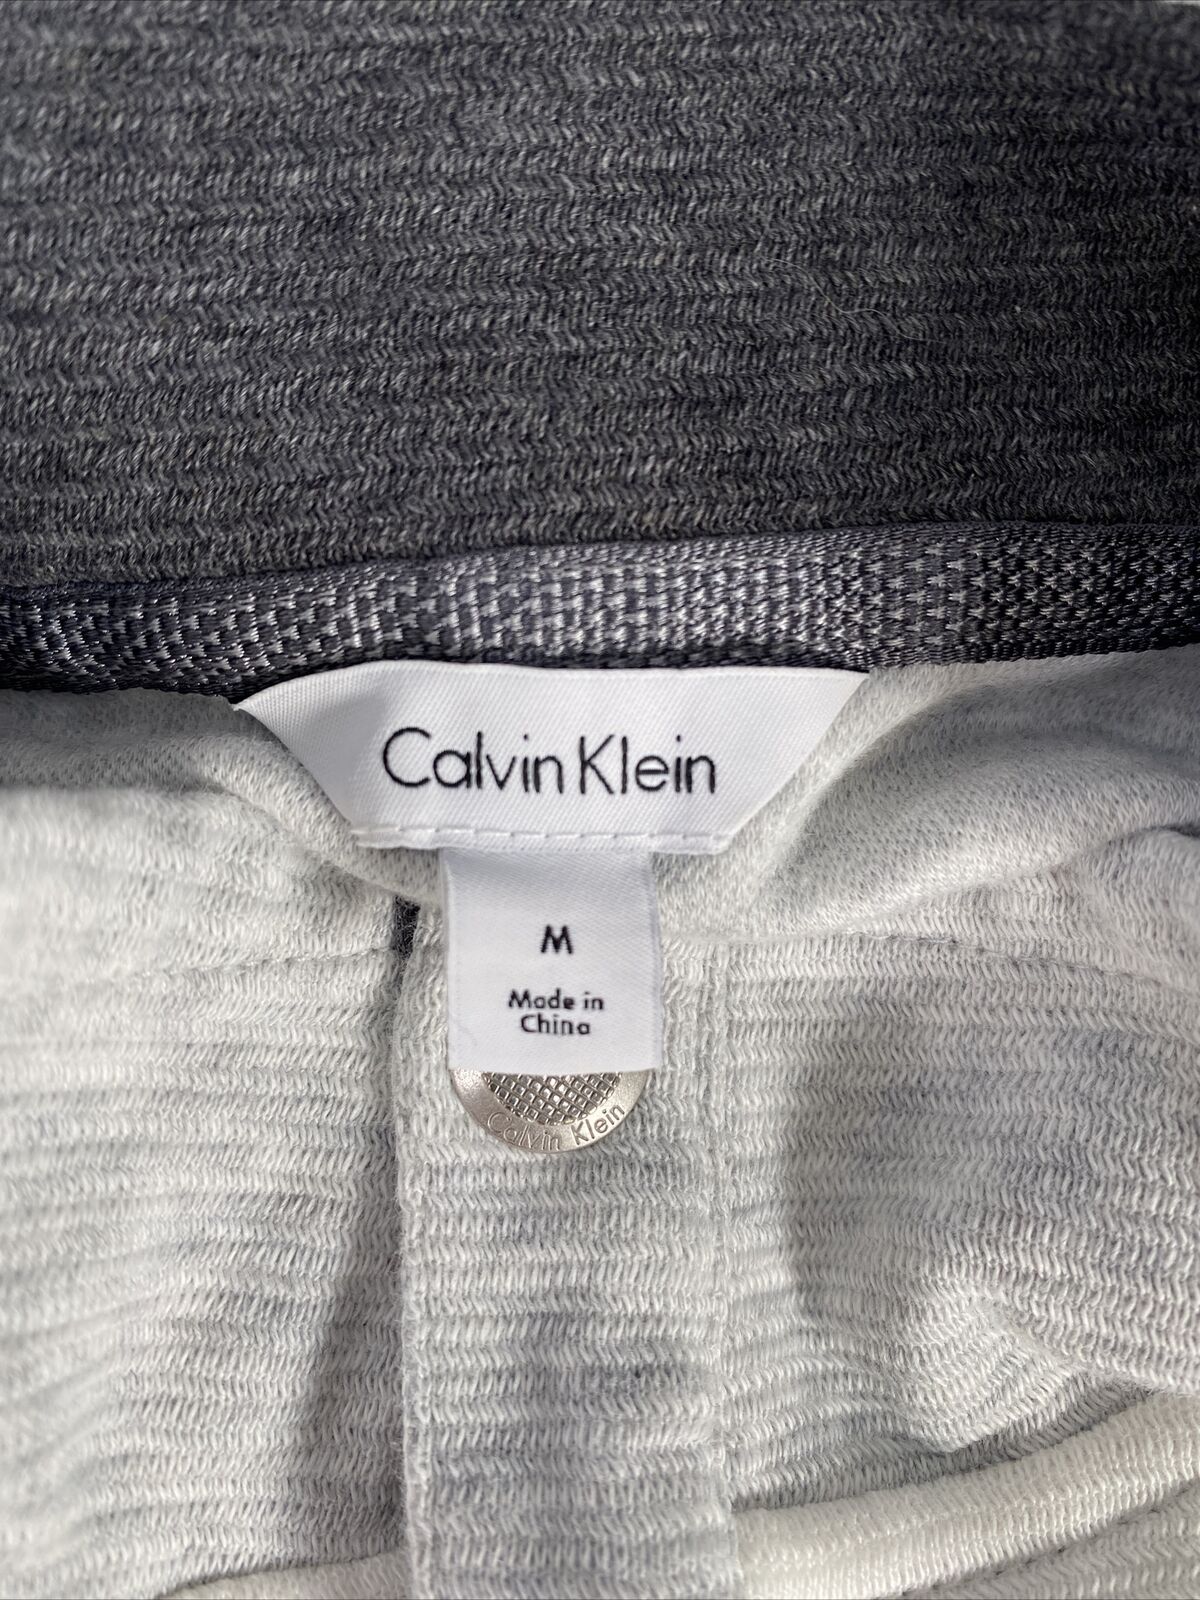 Calvin Klein Men's White Long Sleeve 1/4 Button Pullover Sweater Sz M